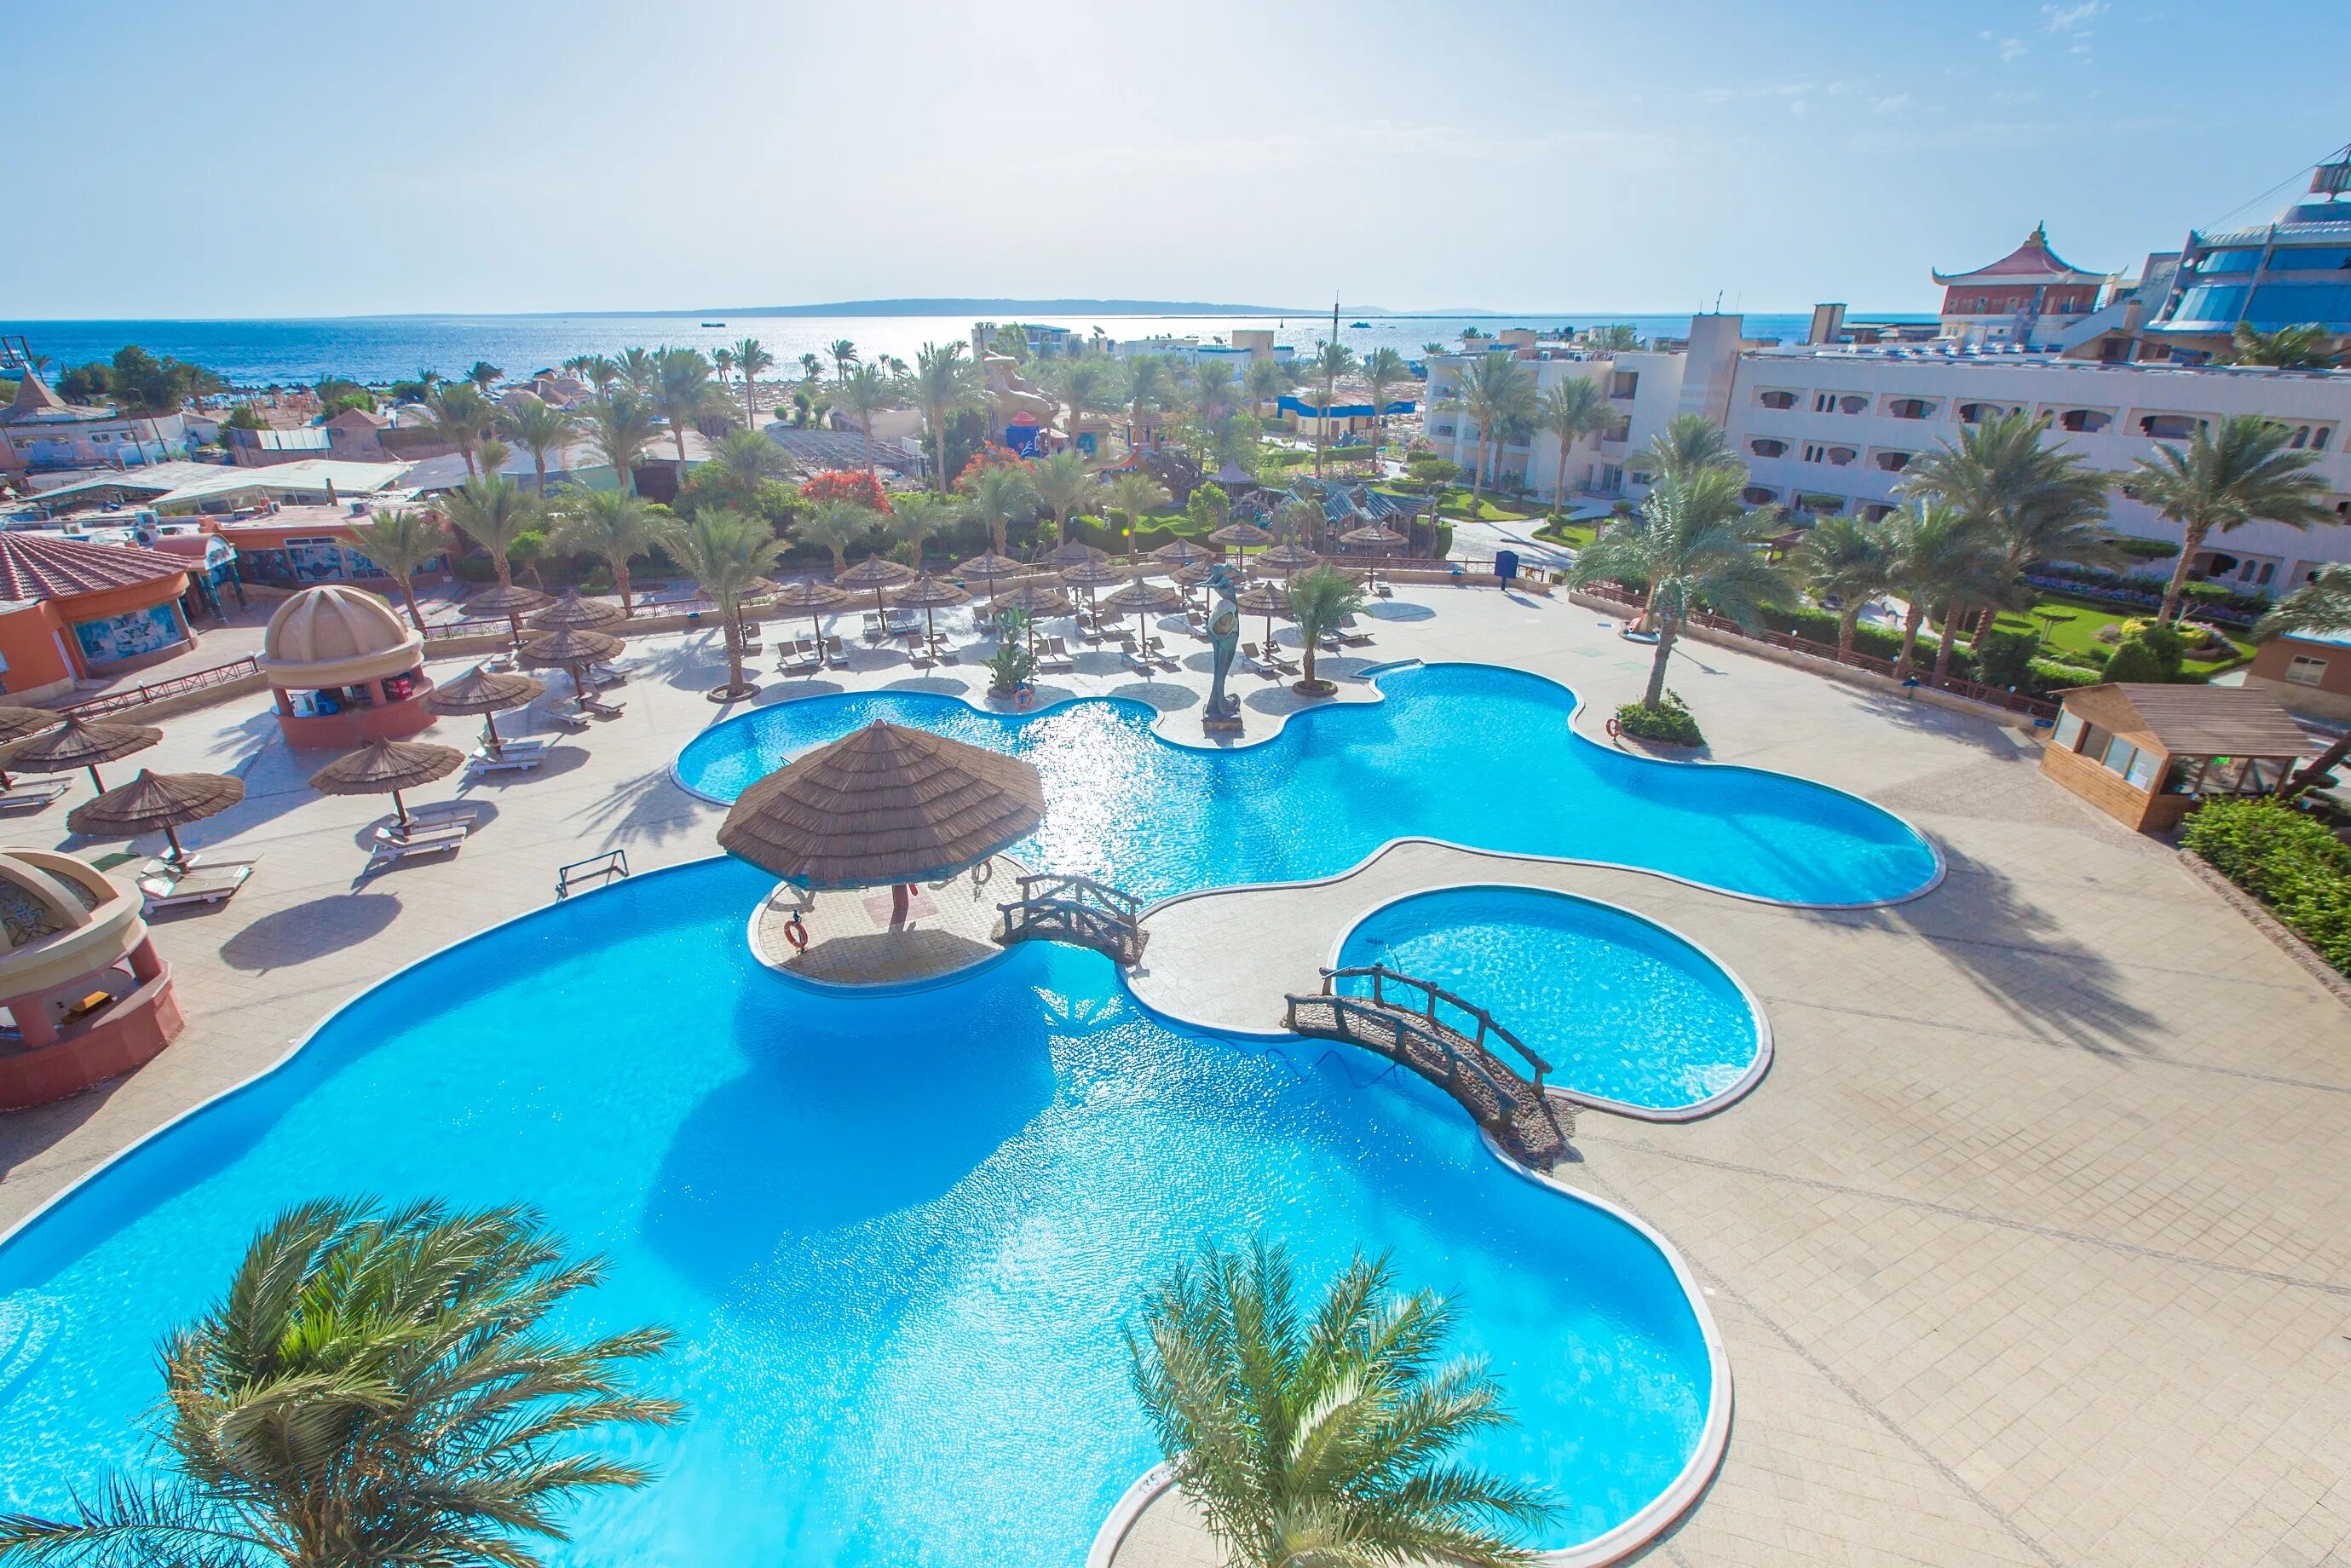 Hurghada seagull resort 4. Египет,Хургада,Seagull Beach Resort. Отель Sea Gull Хургада. Отель Seagull Beach Resort 4 Египет Хургада. Seagull Beach Resort Hurghada 4 ****, Египет, Хургада.